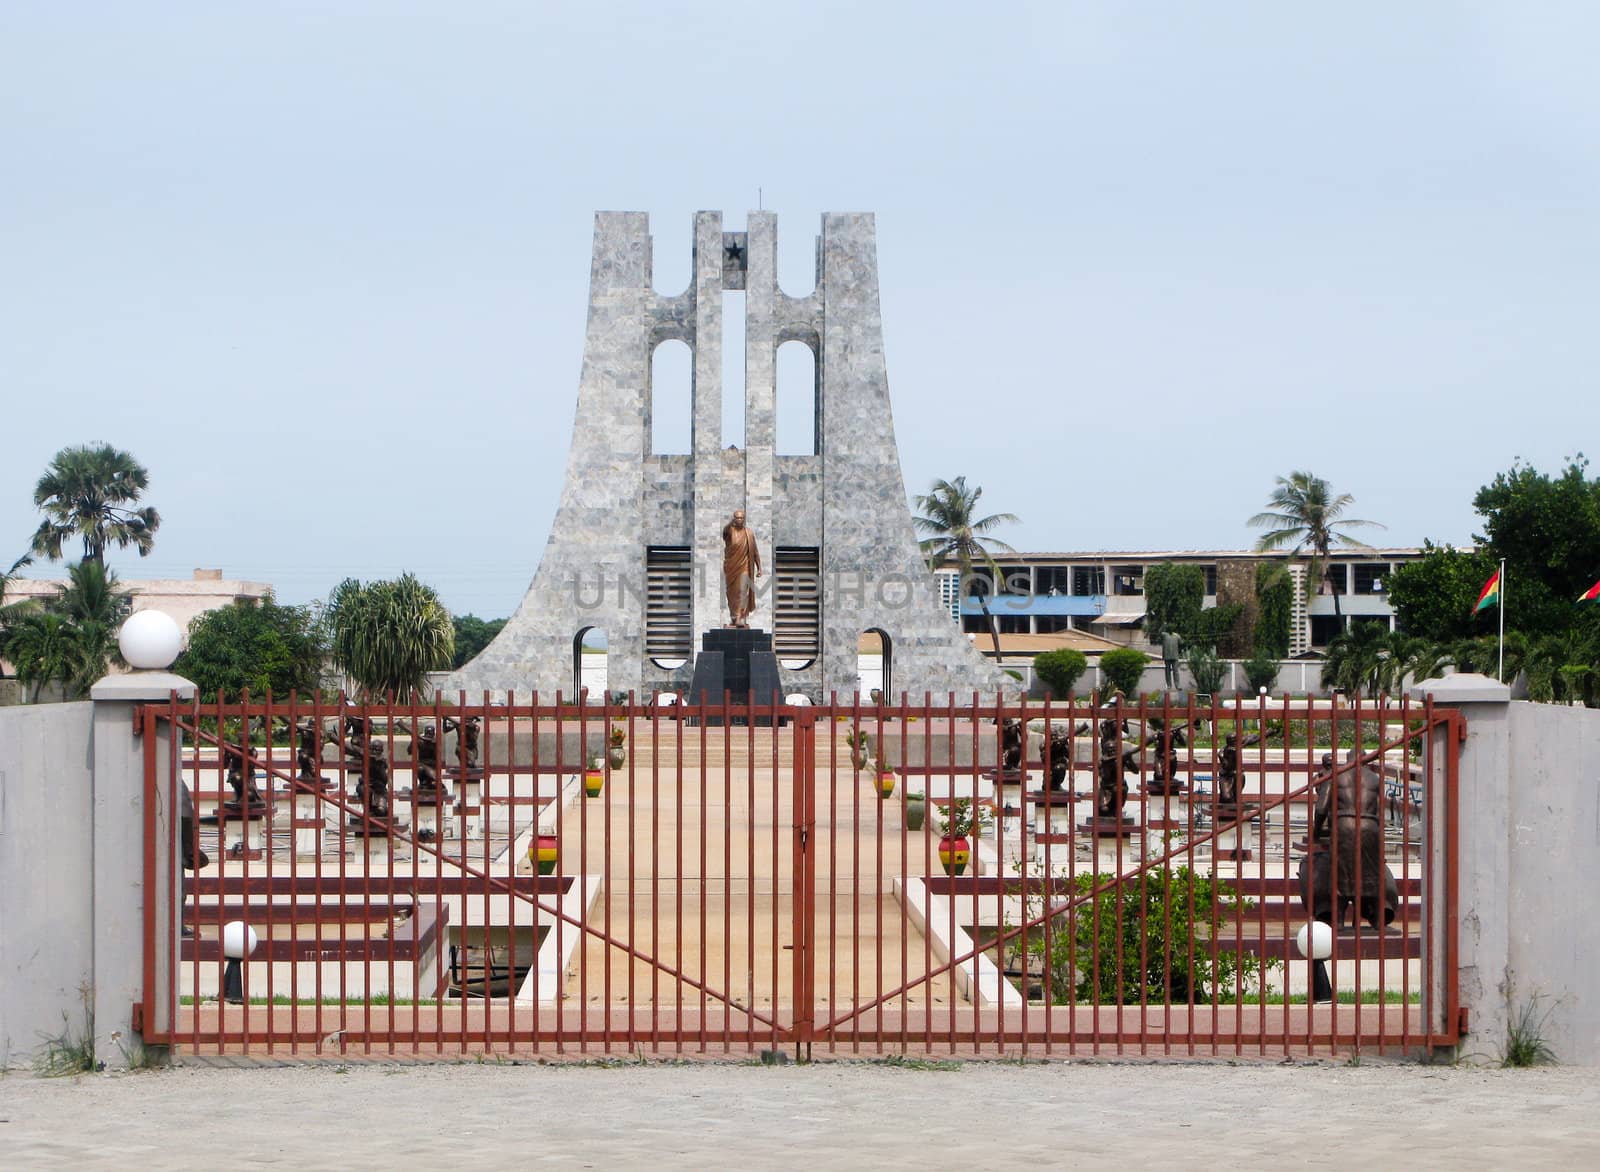 Memorial to Kwame Nkrumah in Accra Ghana by steheap